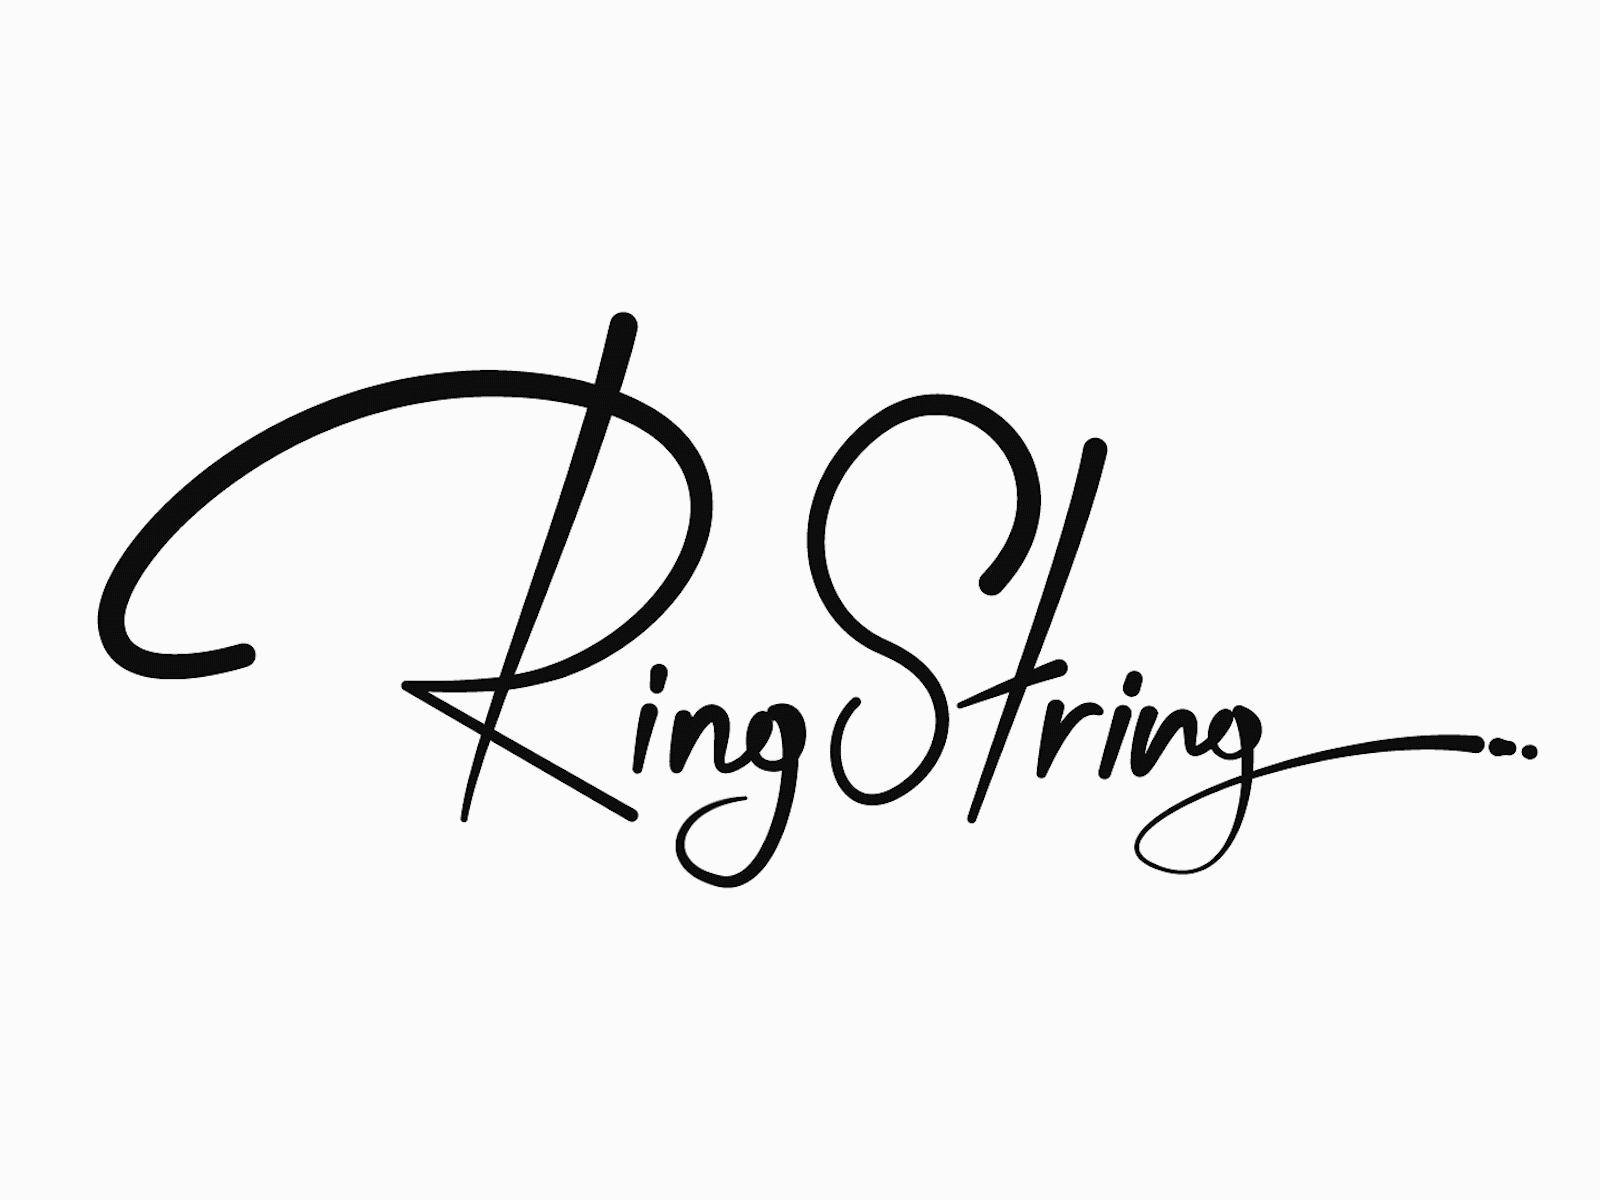 RingString. Logo animation by Pavel Evdokimov on Dribbble